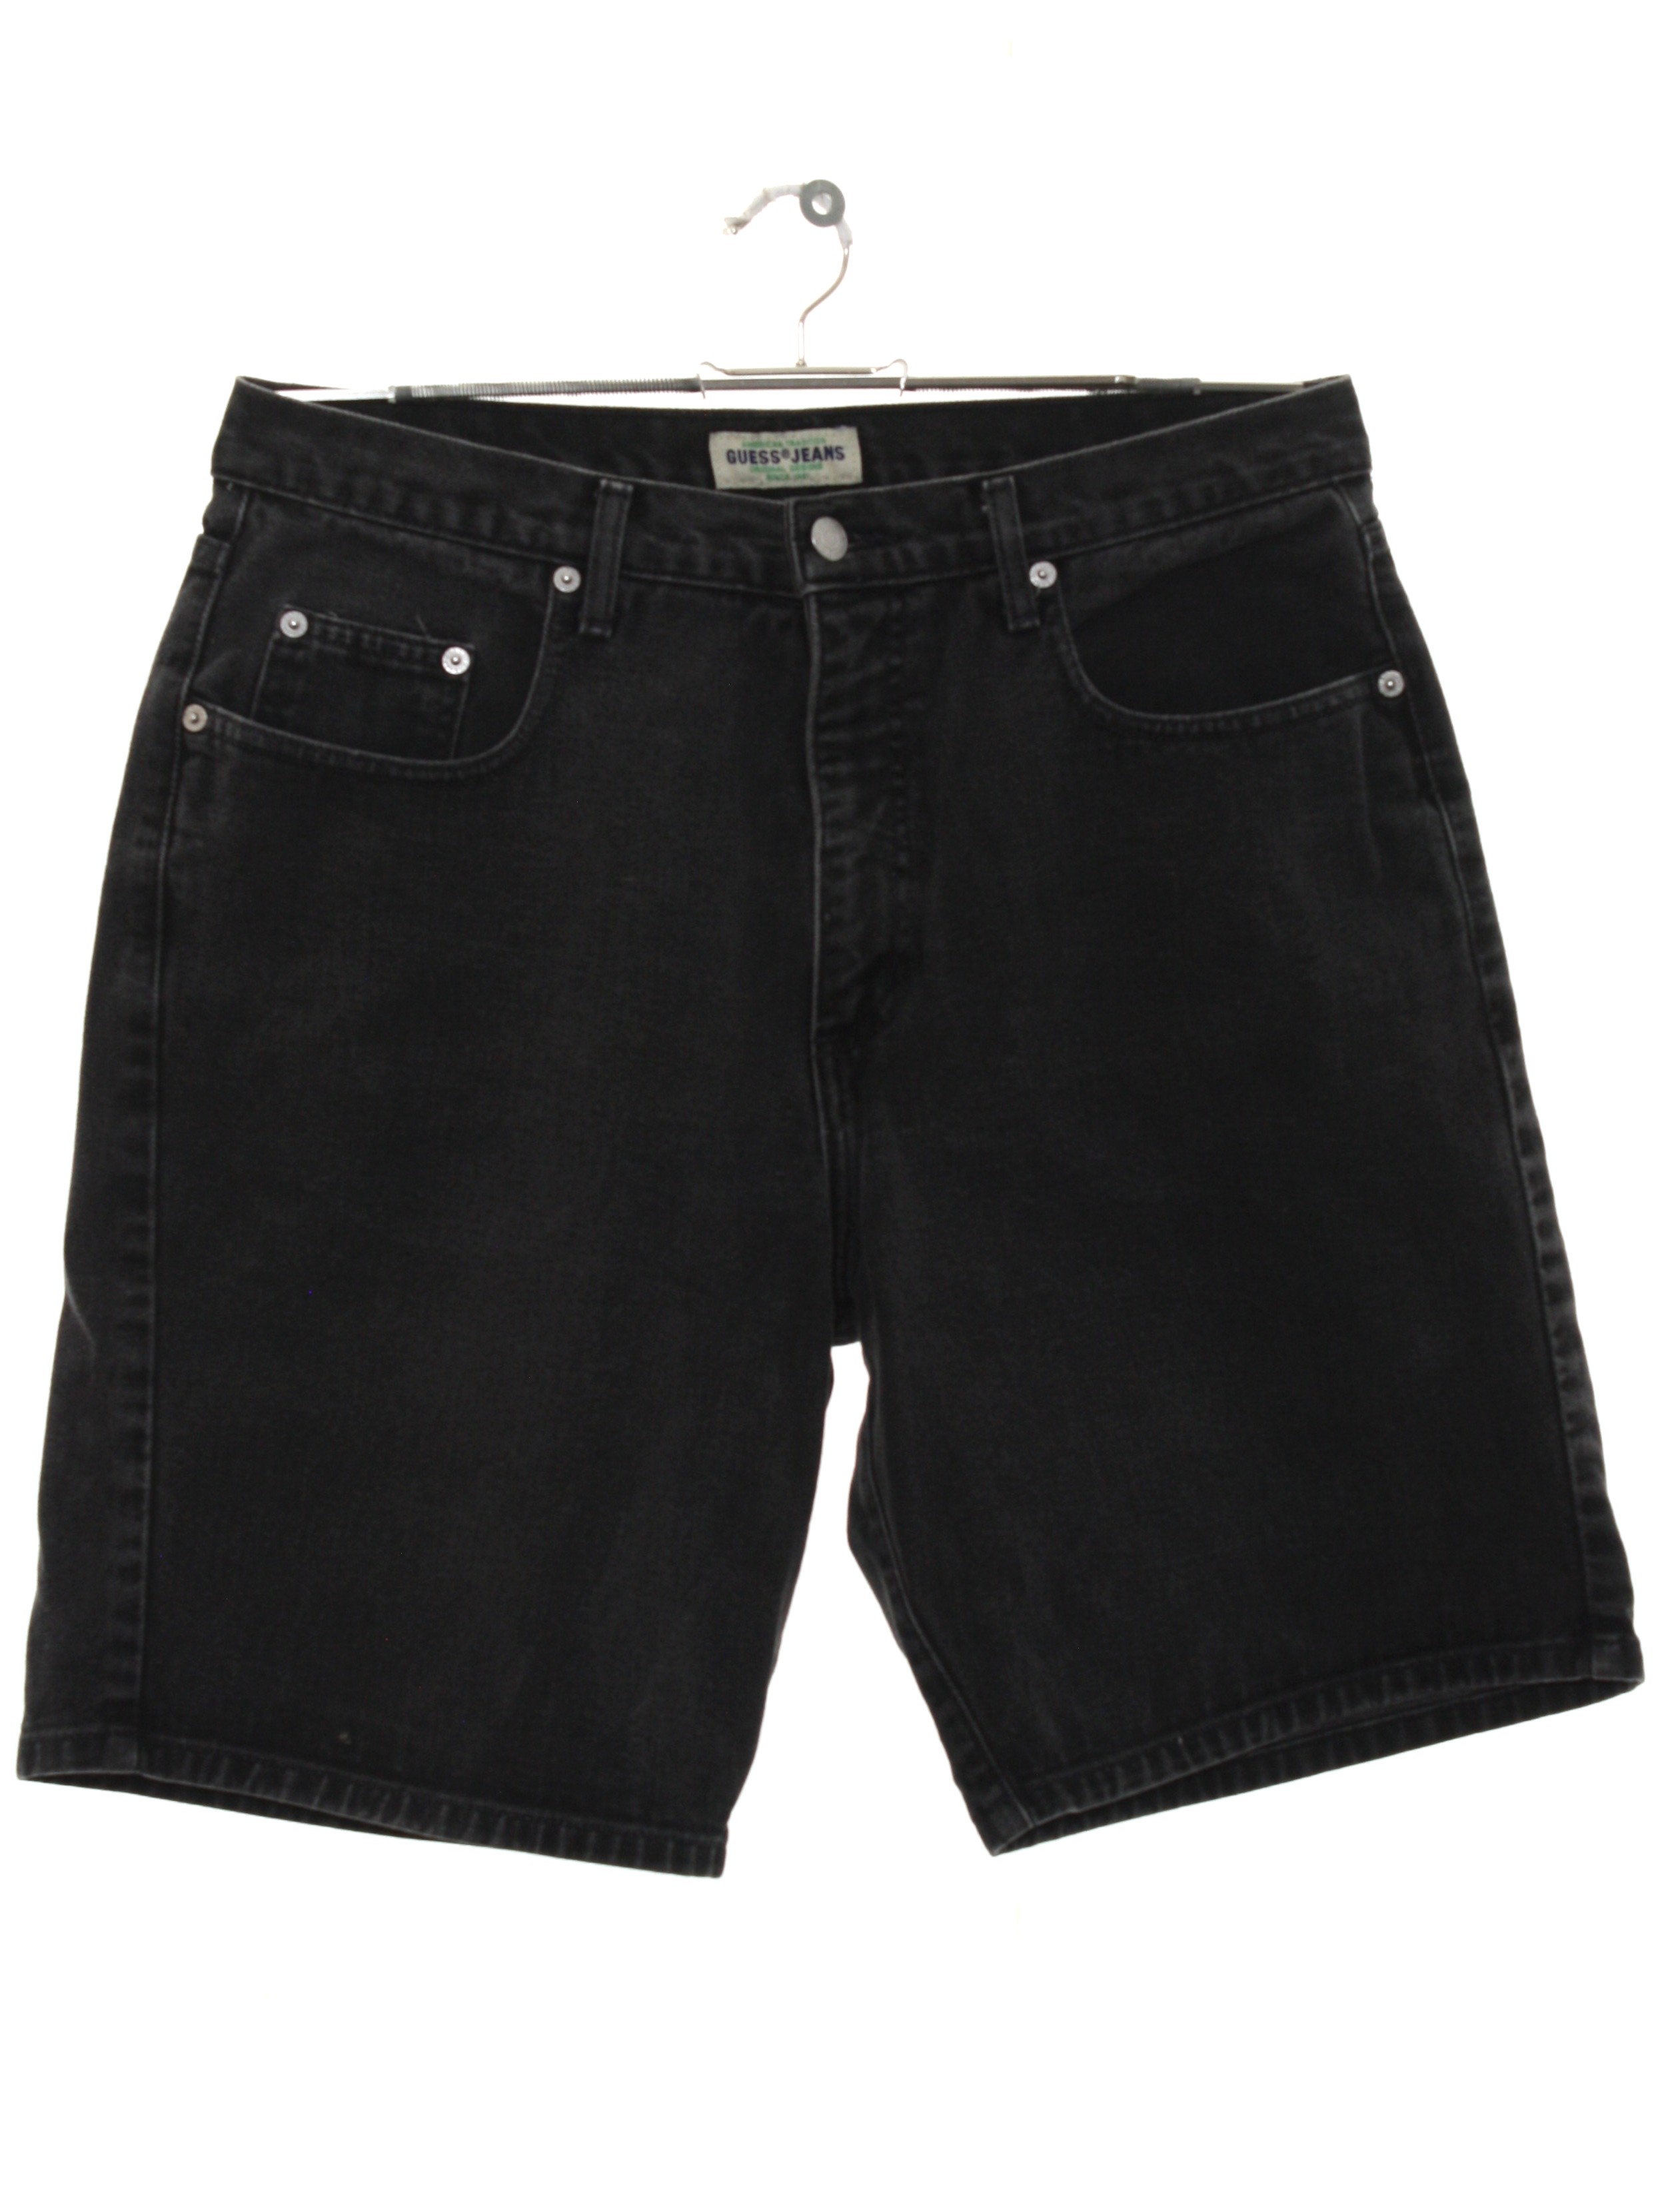 Vintage Guess Jeans 80's Shorts: 80s -Guess Jeans- Mens black ...